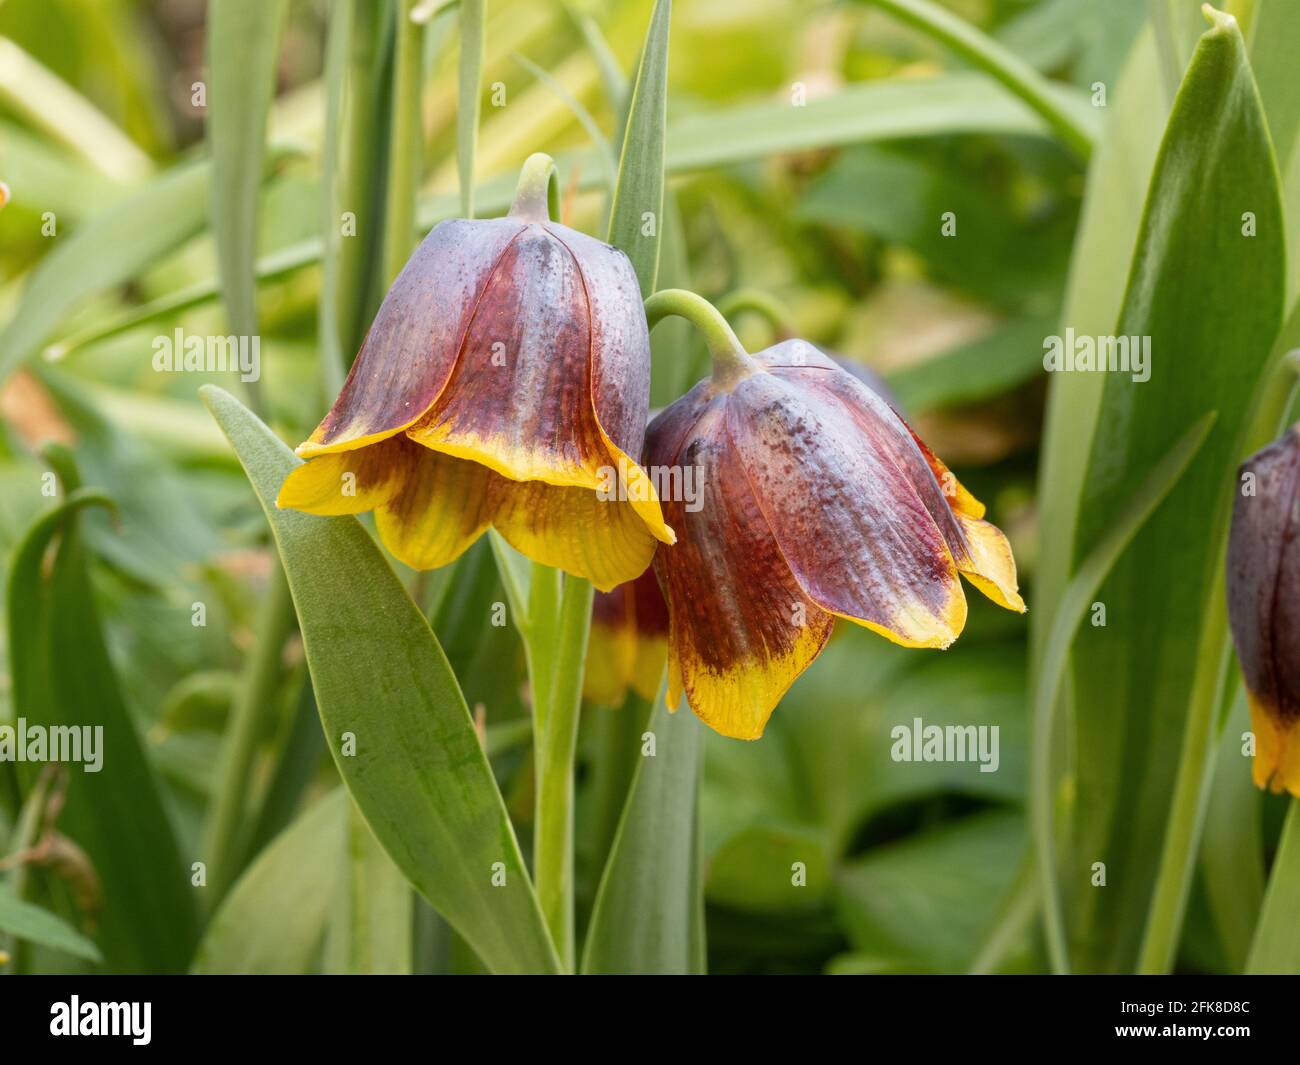 A close up of 2 mahogany and yellow bell shaped flowers of Fritillaria michailovski Stock Photo